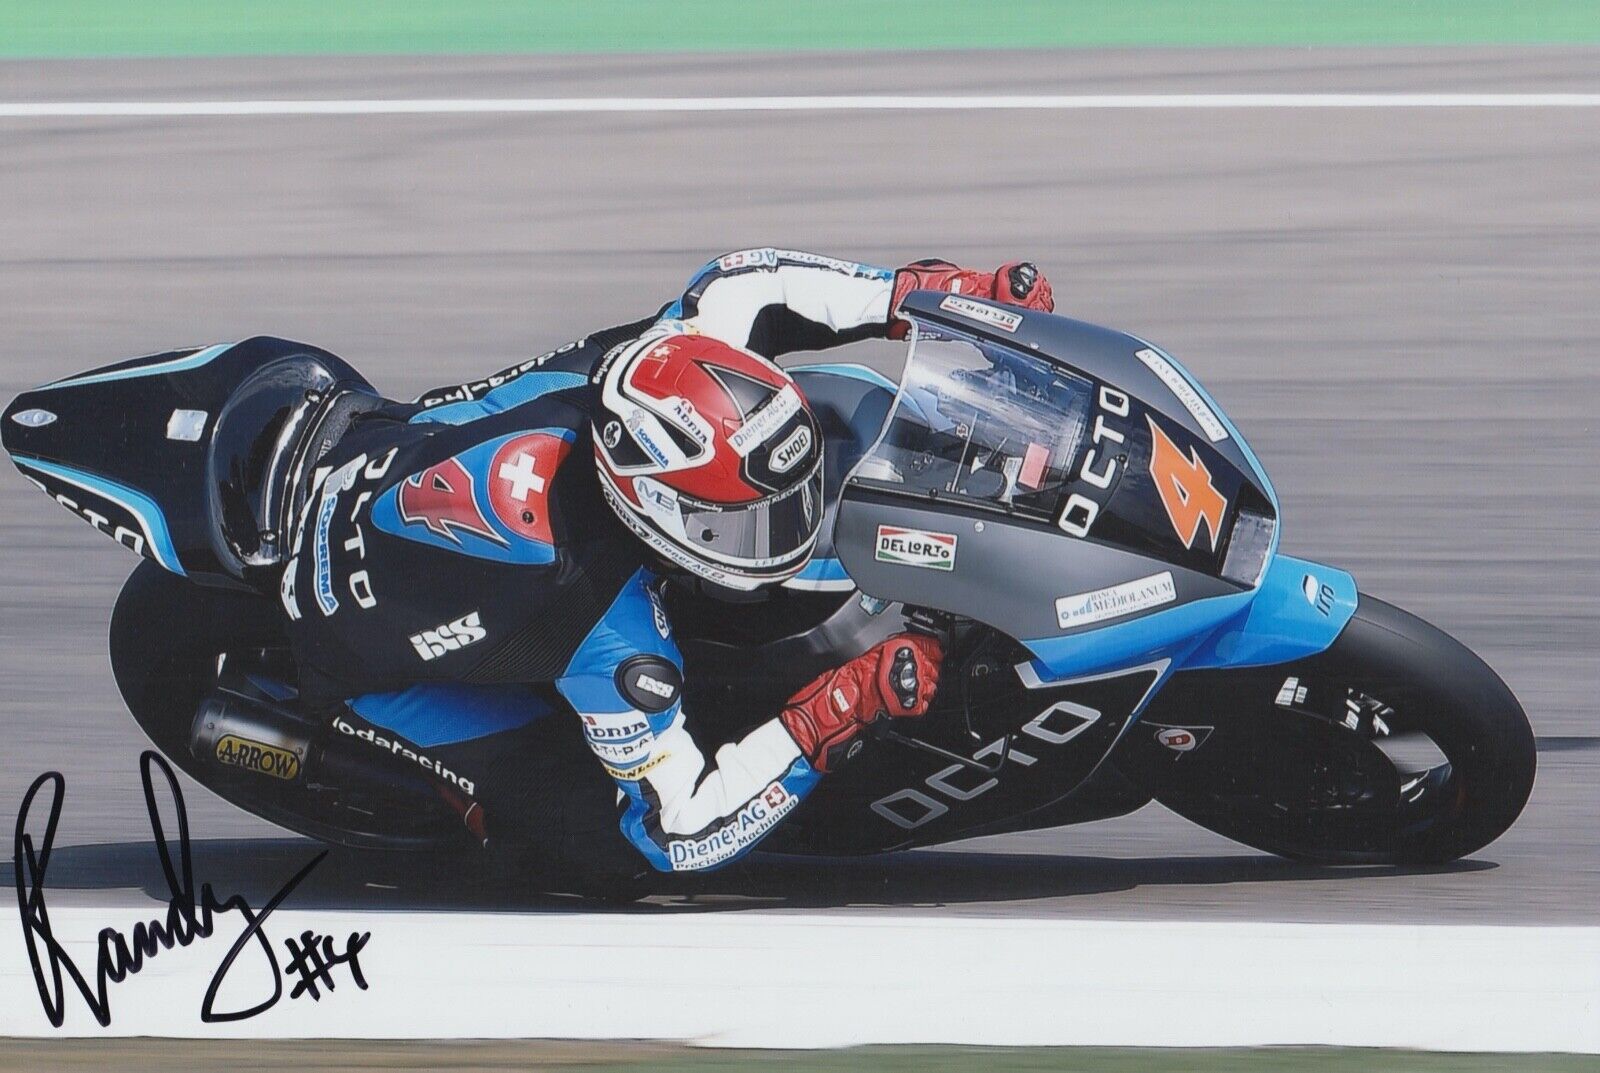 Randy Krummenacher Hand Signed 12x8 Photo Poster painting MotoGP Autograph IodaRacing Suter